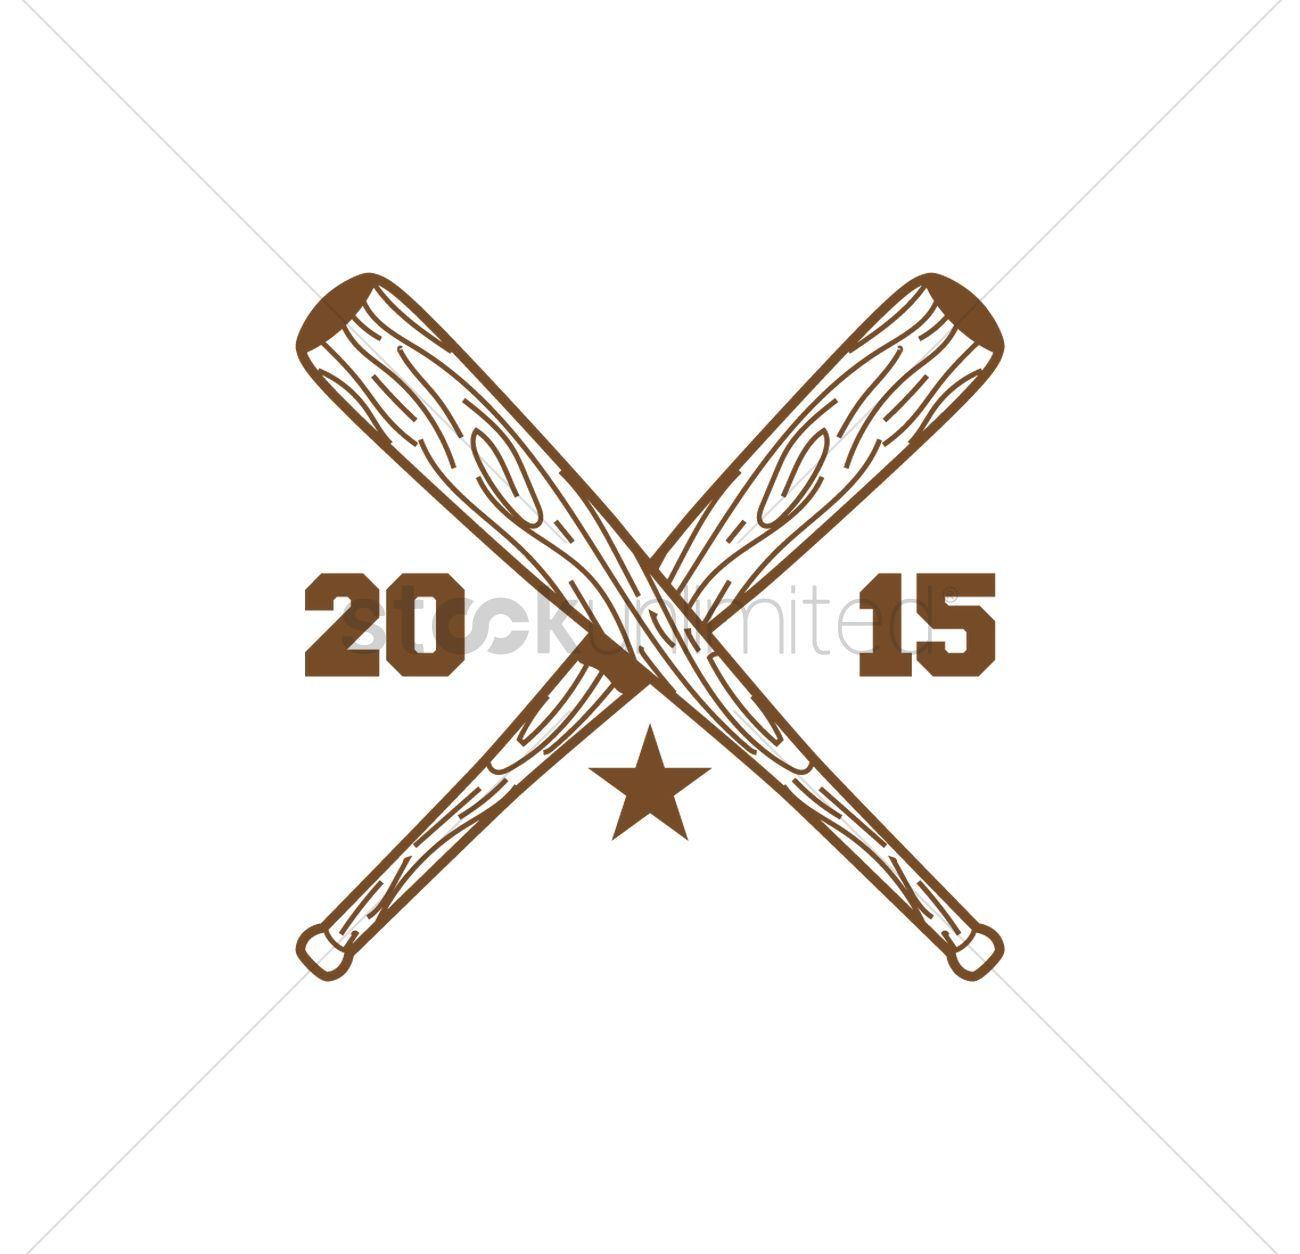 Cool Baseball Bat Logo - Crossed baseball bat Vector Image - 1523845 | StockUnlimited